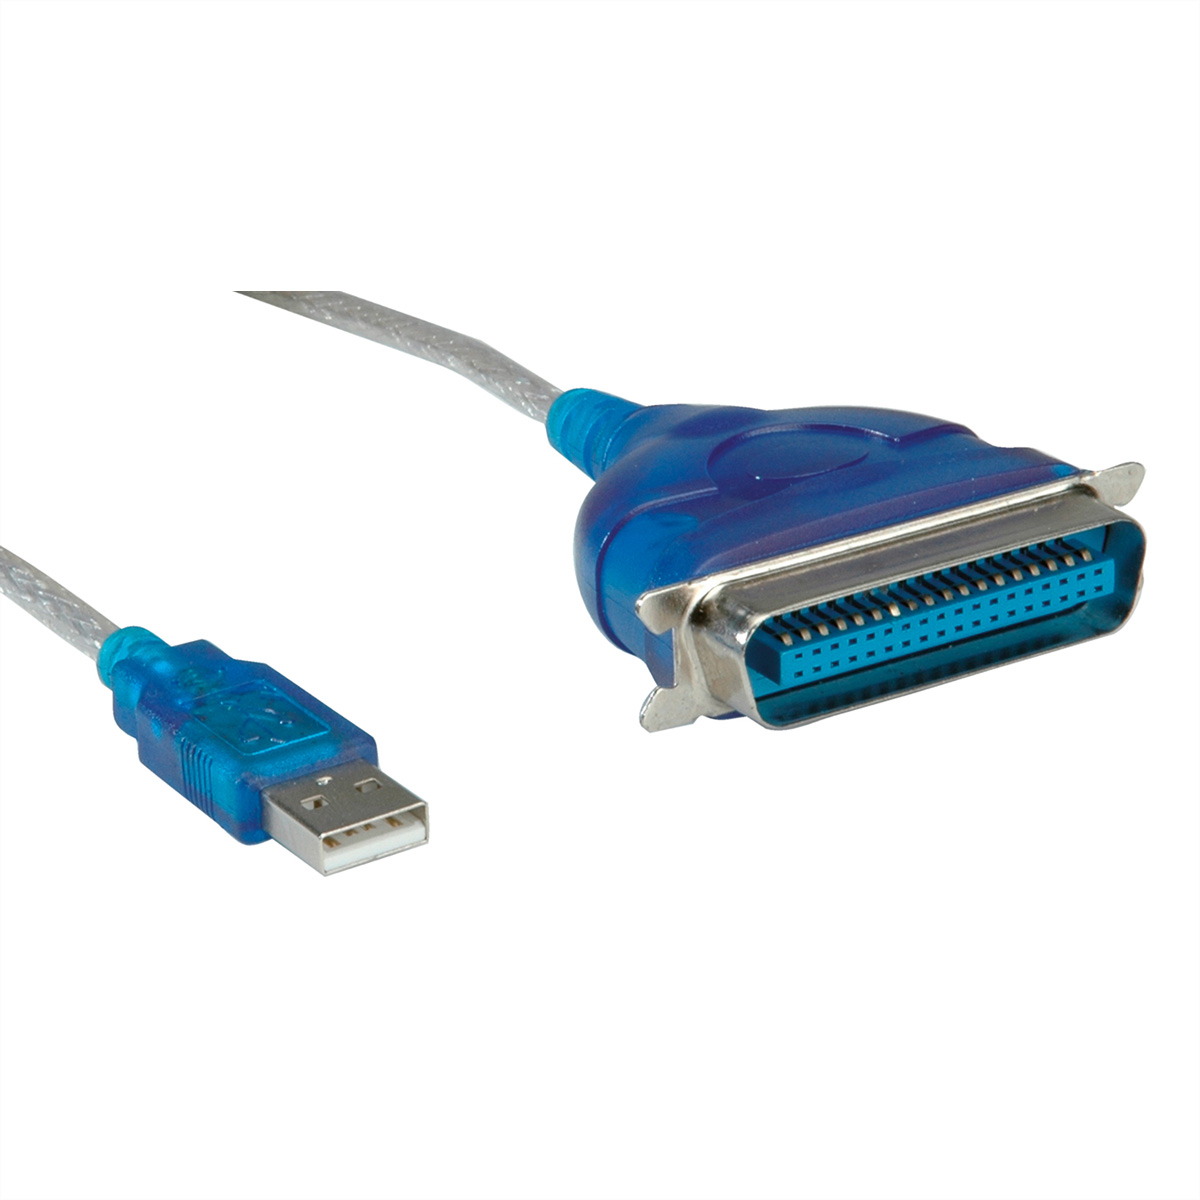 Kabel 1284 VALUE USB nach USB-Parallel IEEE Konverter Konverter USB